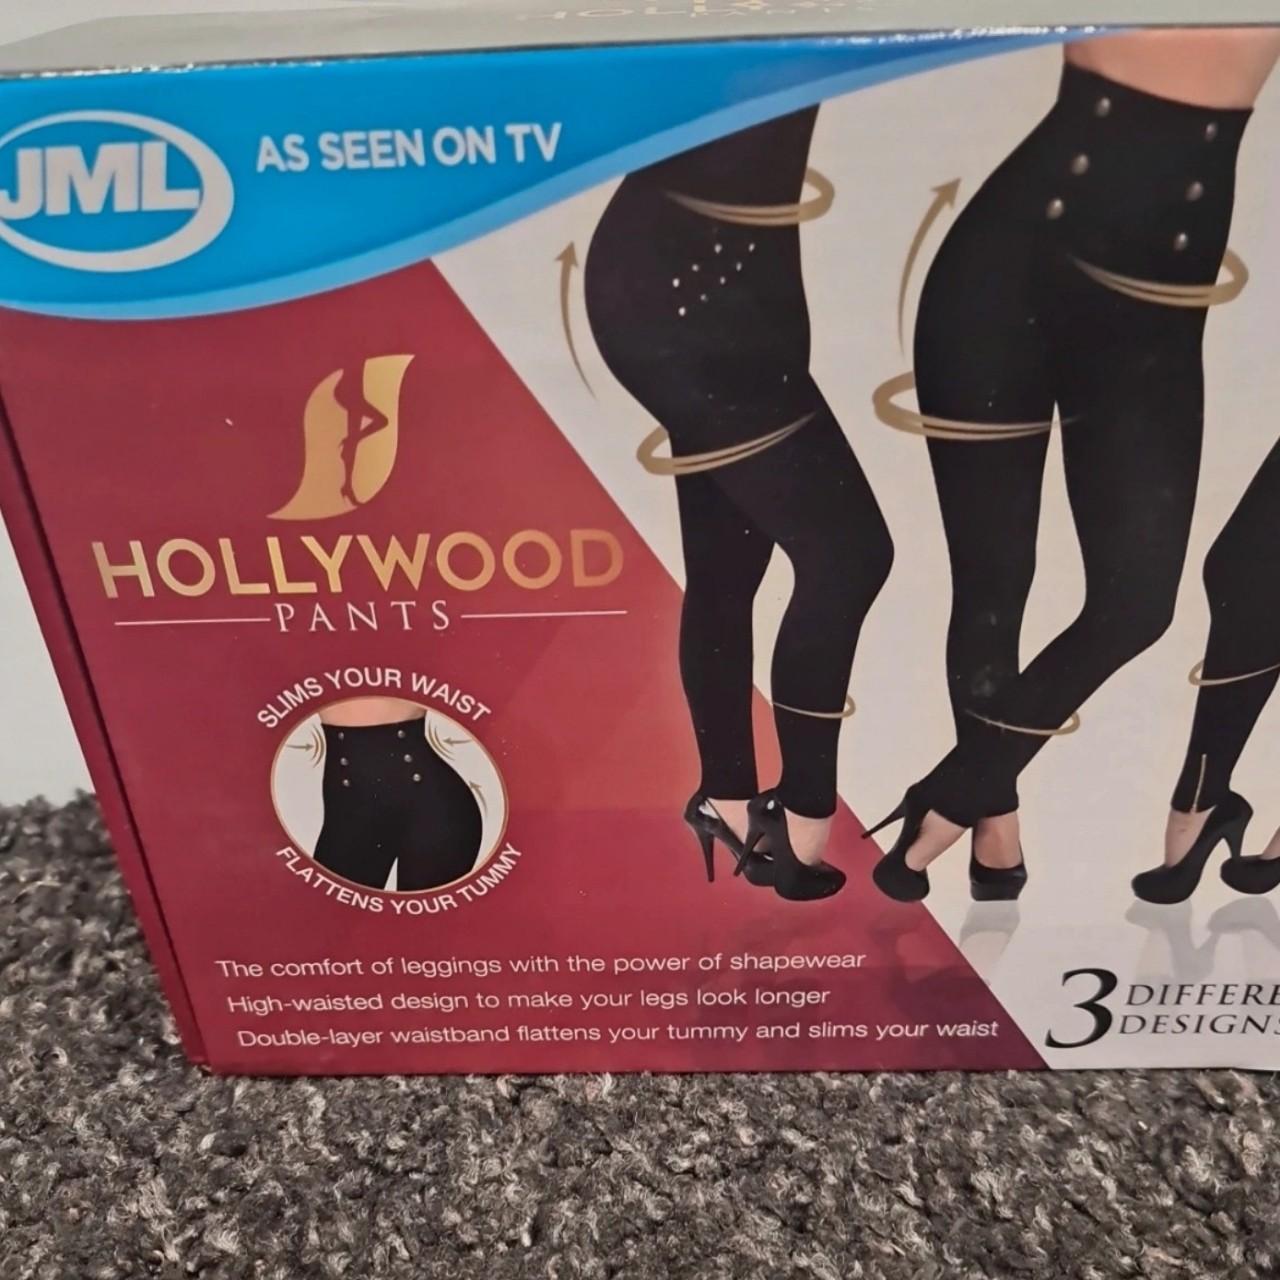 JML HOLLYWOOD PANTS Slimming Tight Leggings High Waisted Shapewear